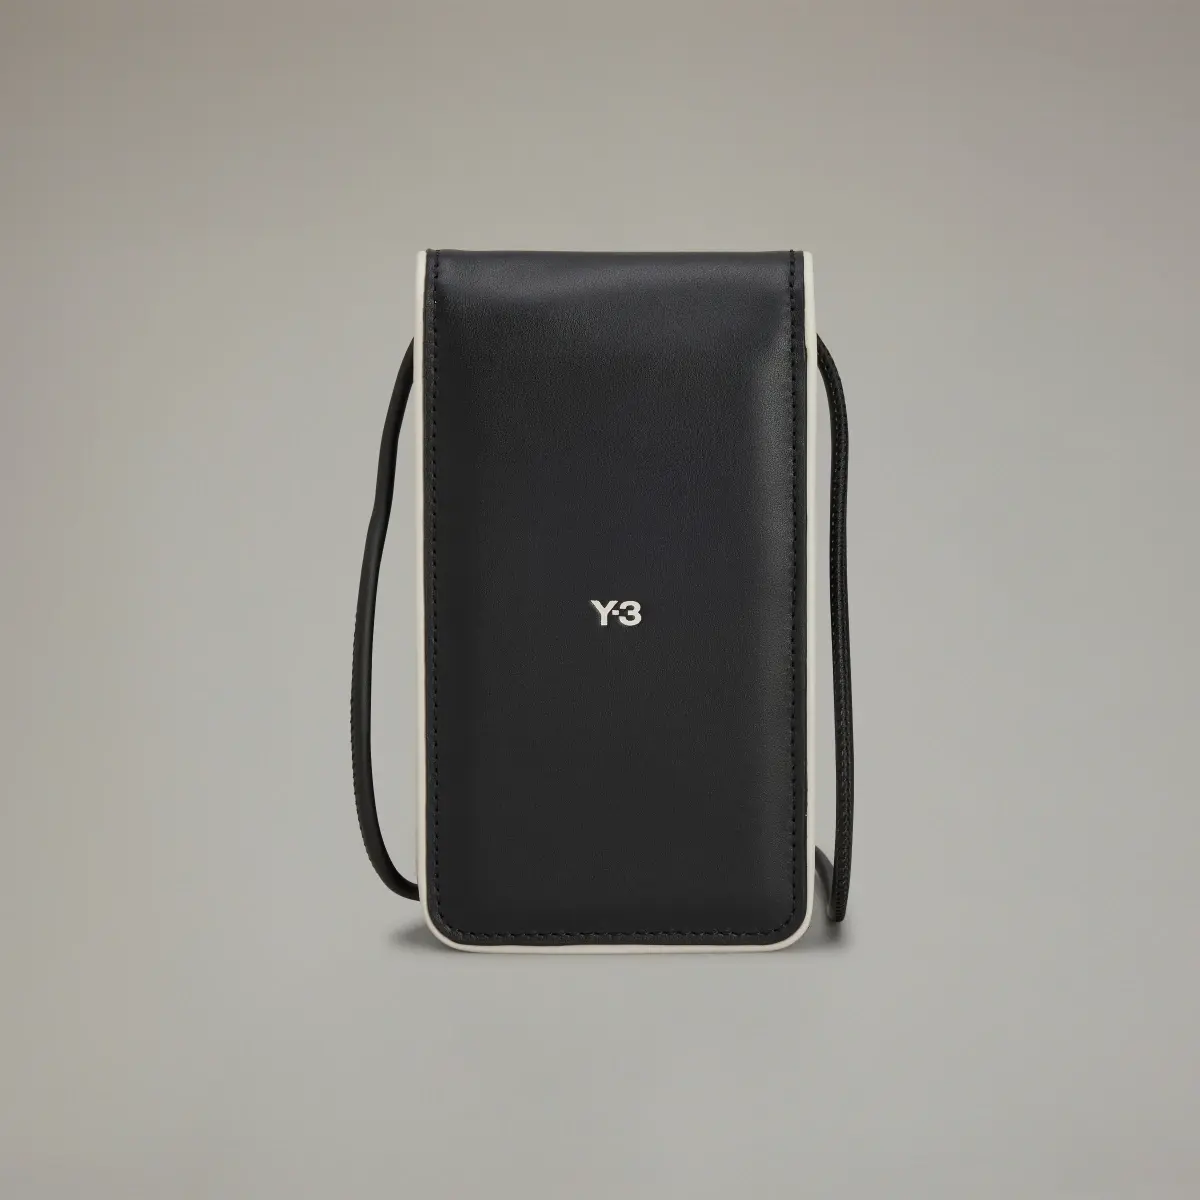 Adidas Y-3 Phone Case. 2